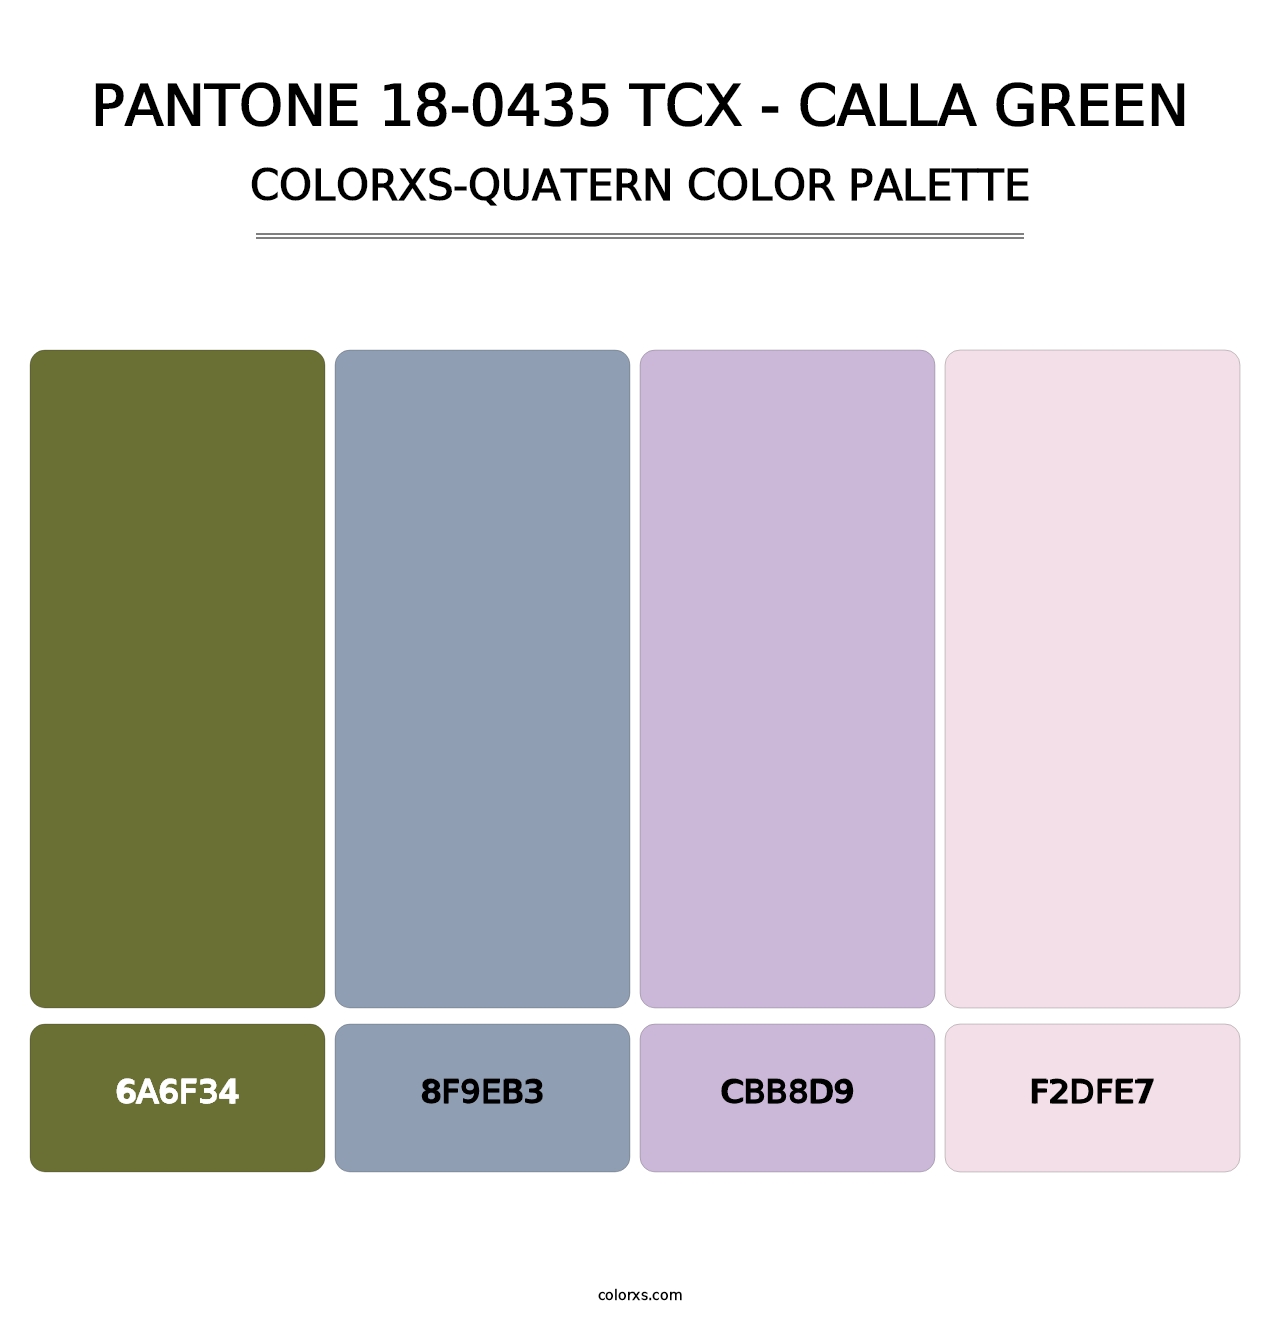 PANTONE 18-0435 TCX - Calla Green - Colorxs Quatern Palette